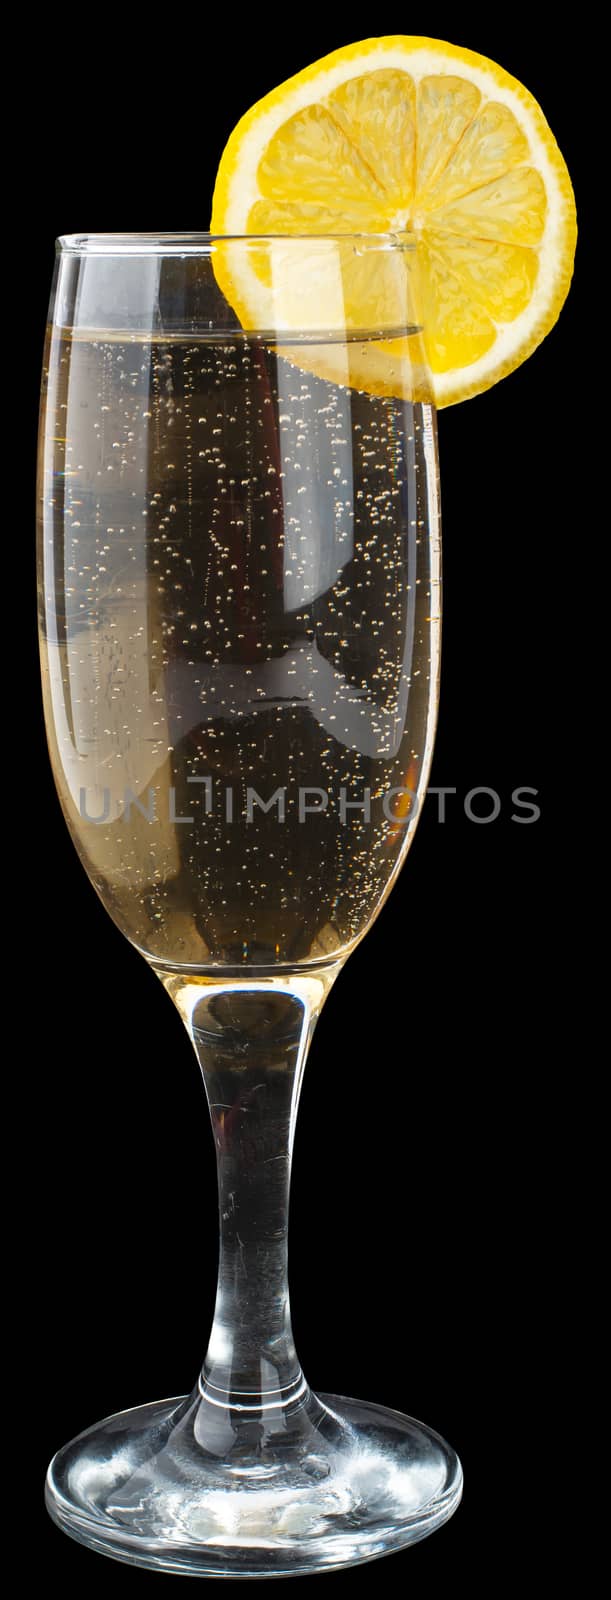 Champagne glass with lemon slice on black background